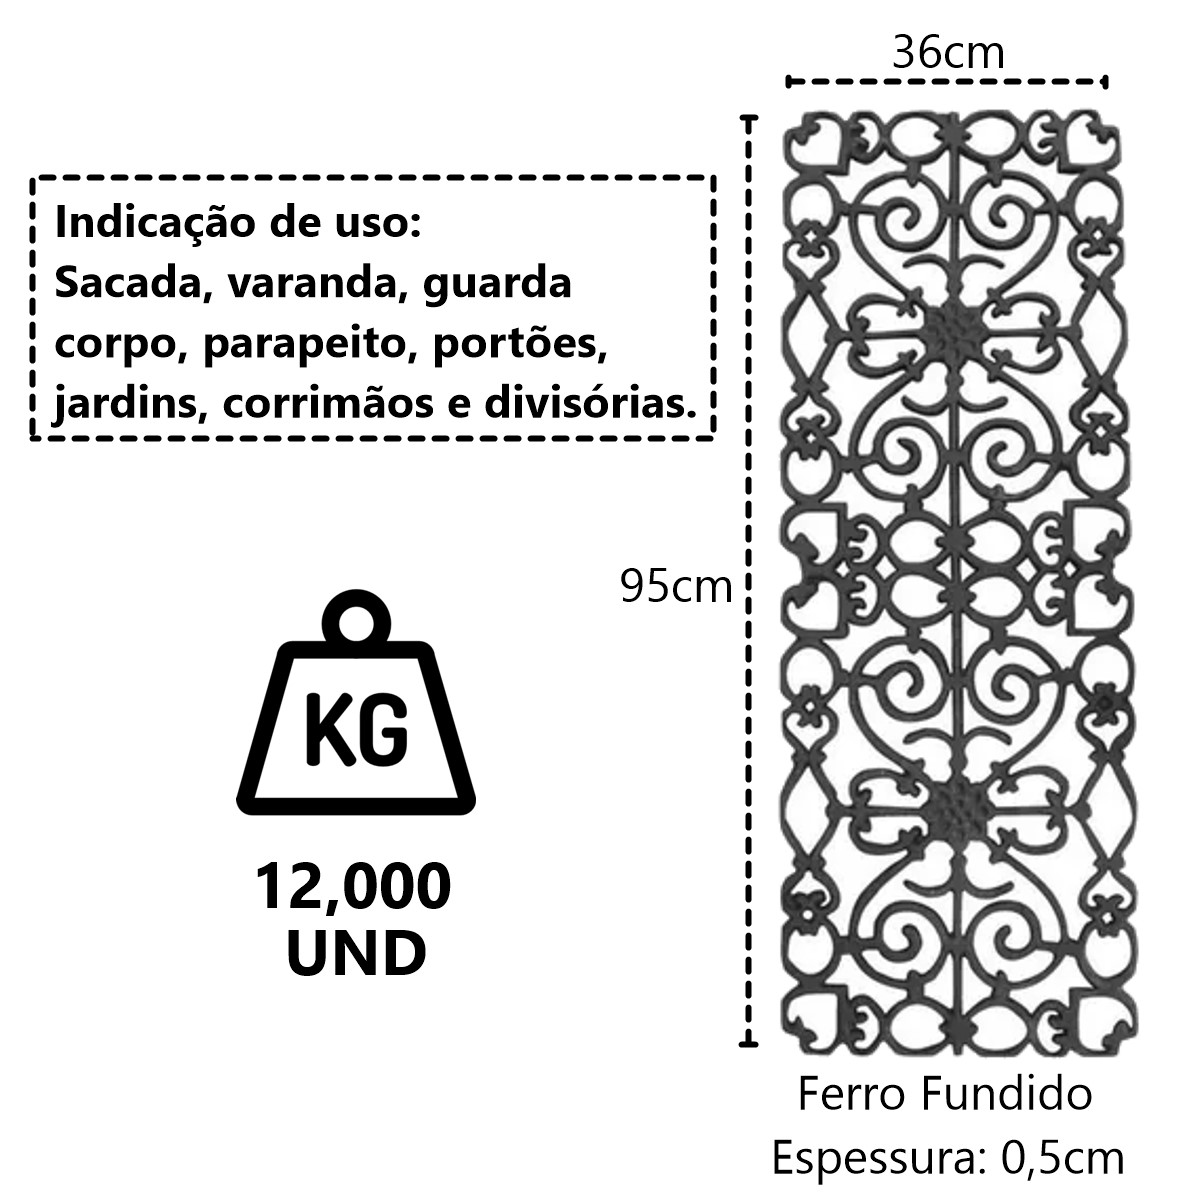 Grade de Ferro Fundido Ramada Sacada Varanda Escada 95x36cm